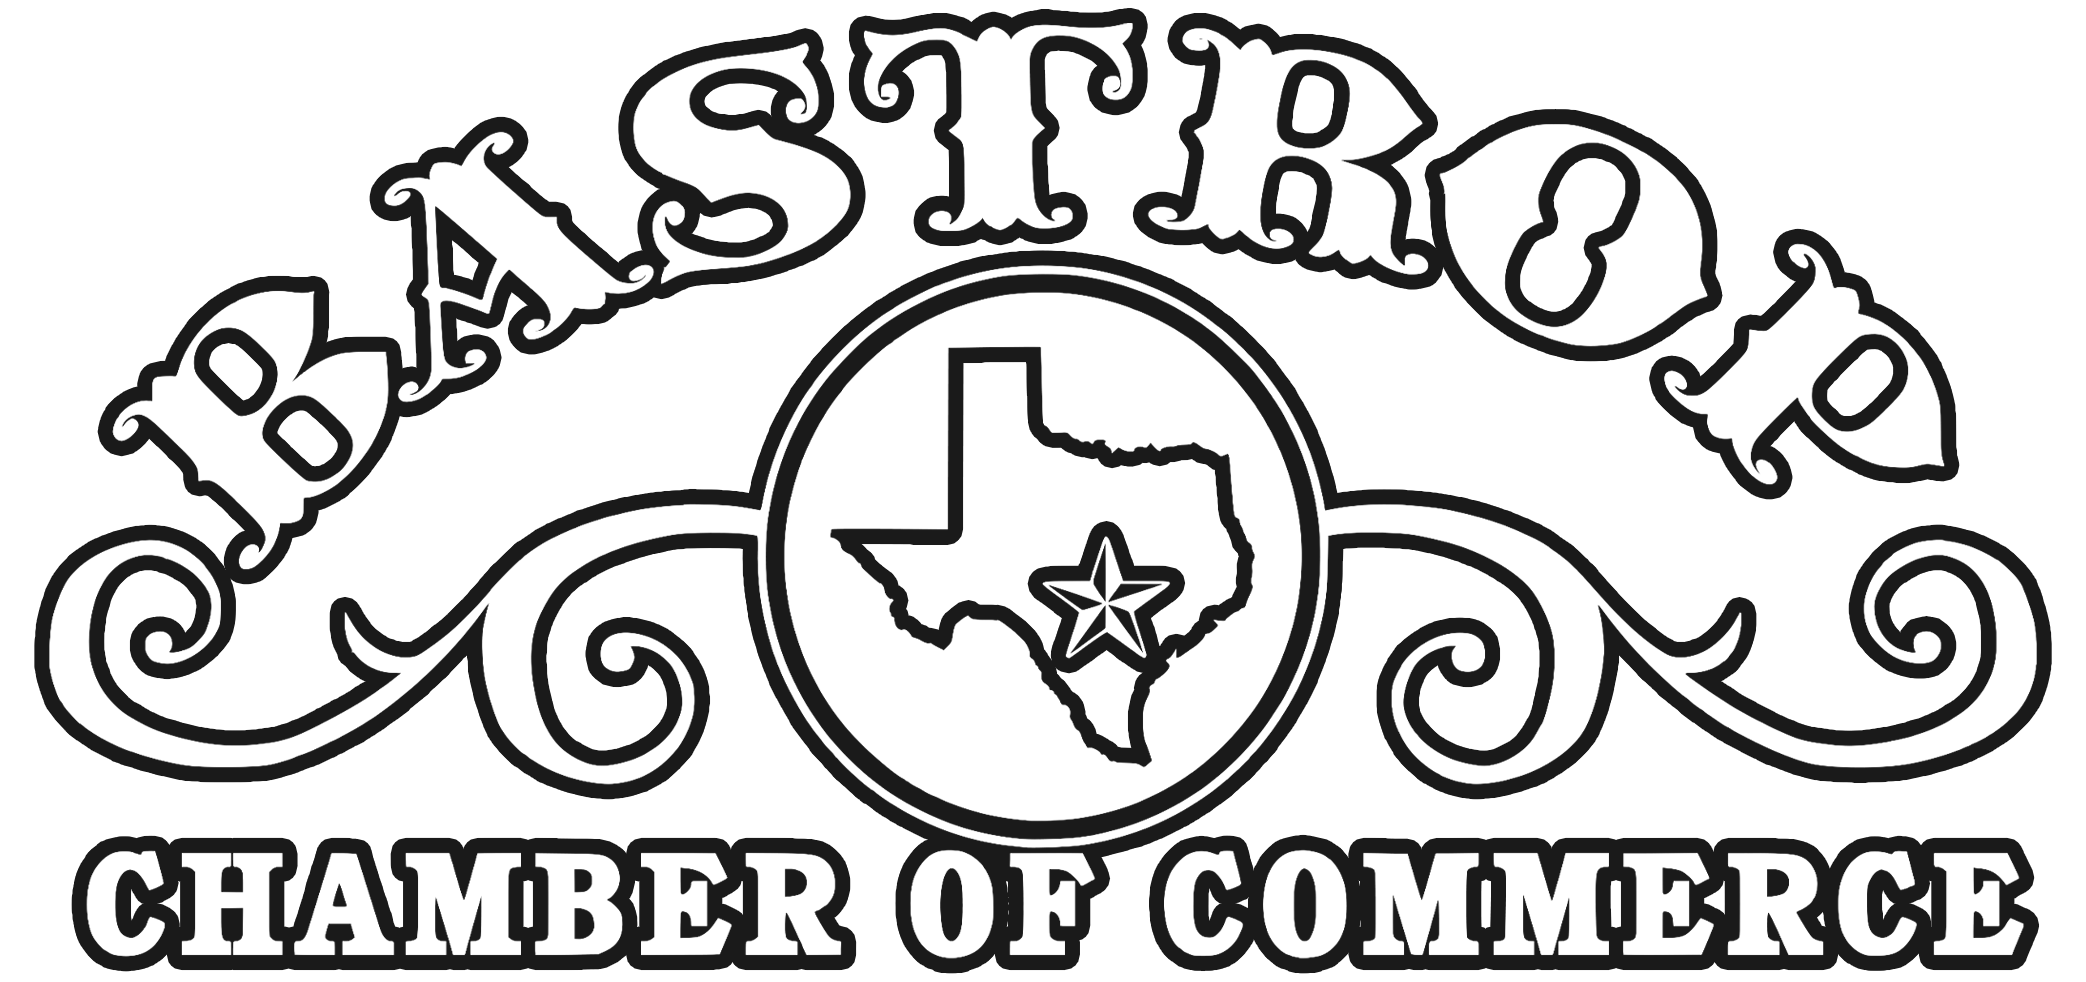 Bastrop chamber of commerce logo